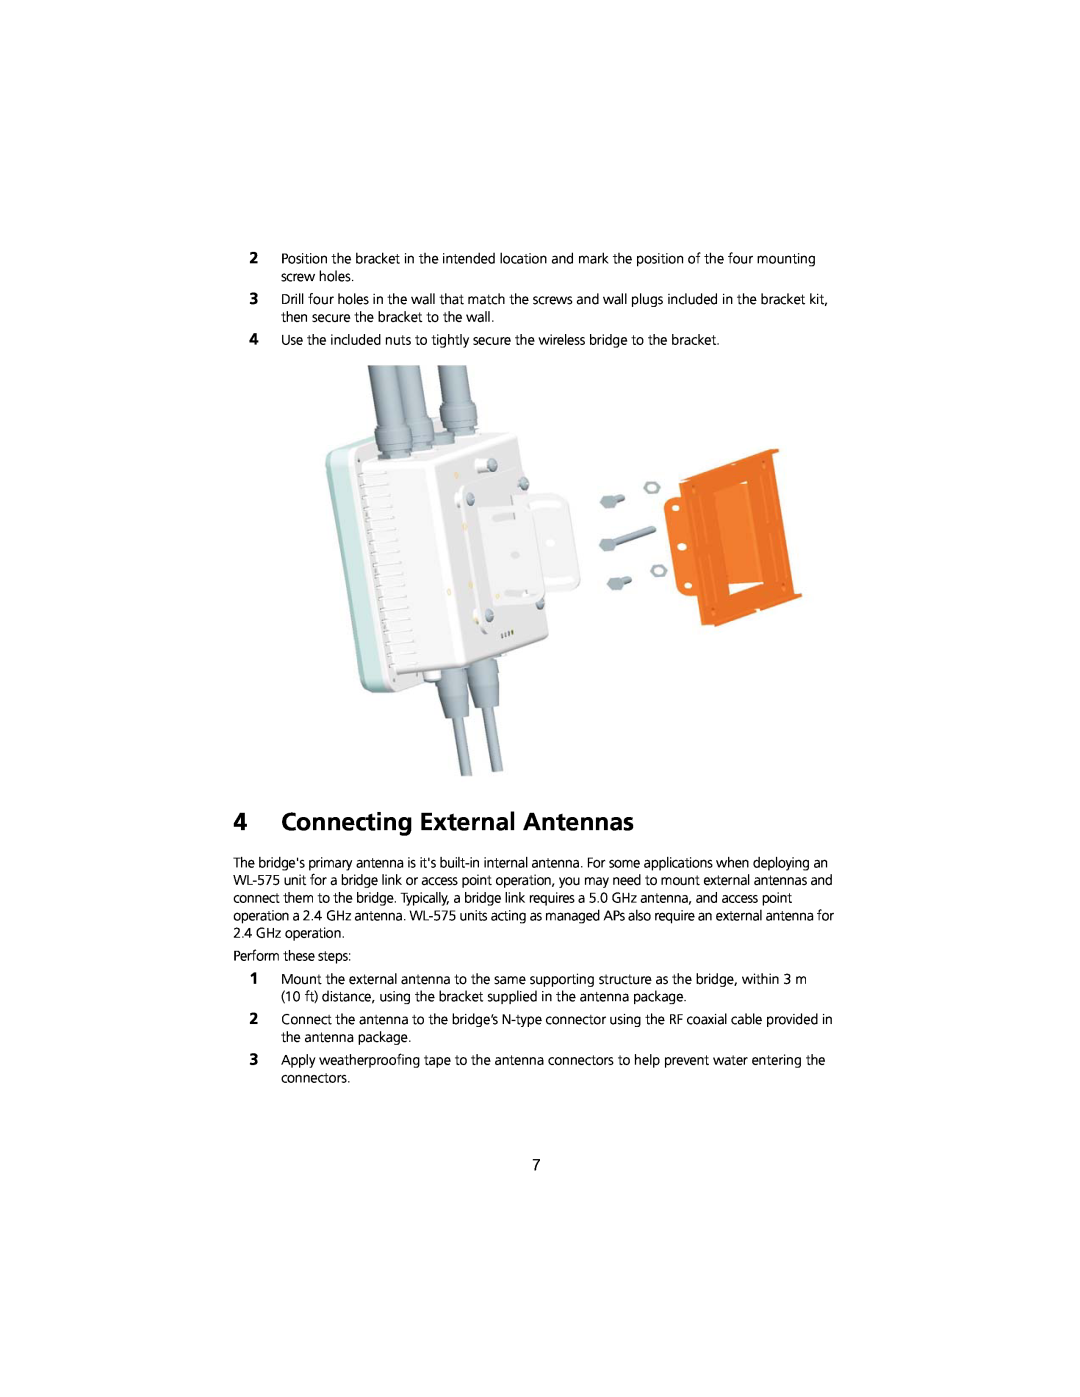 3Com 3CRWEASYA73 quick start Connecting External Antennas, GHz operation. Perform these steps 